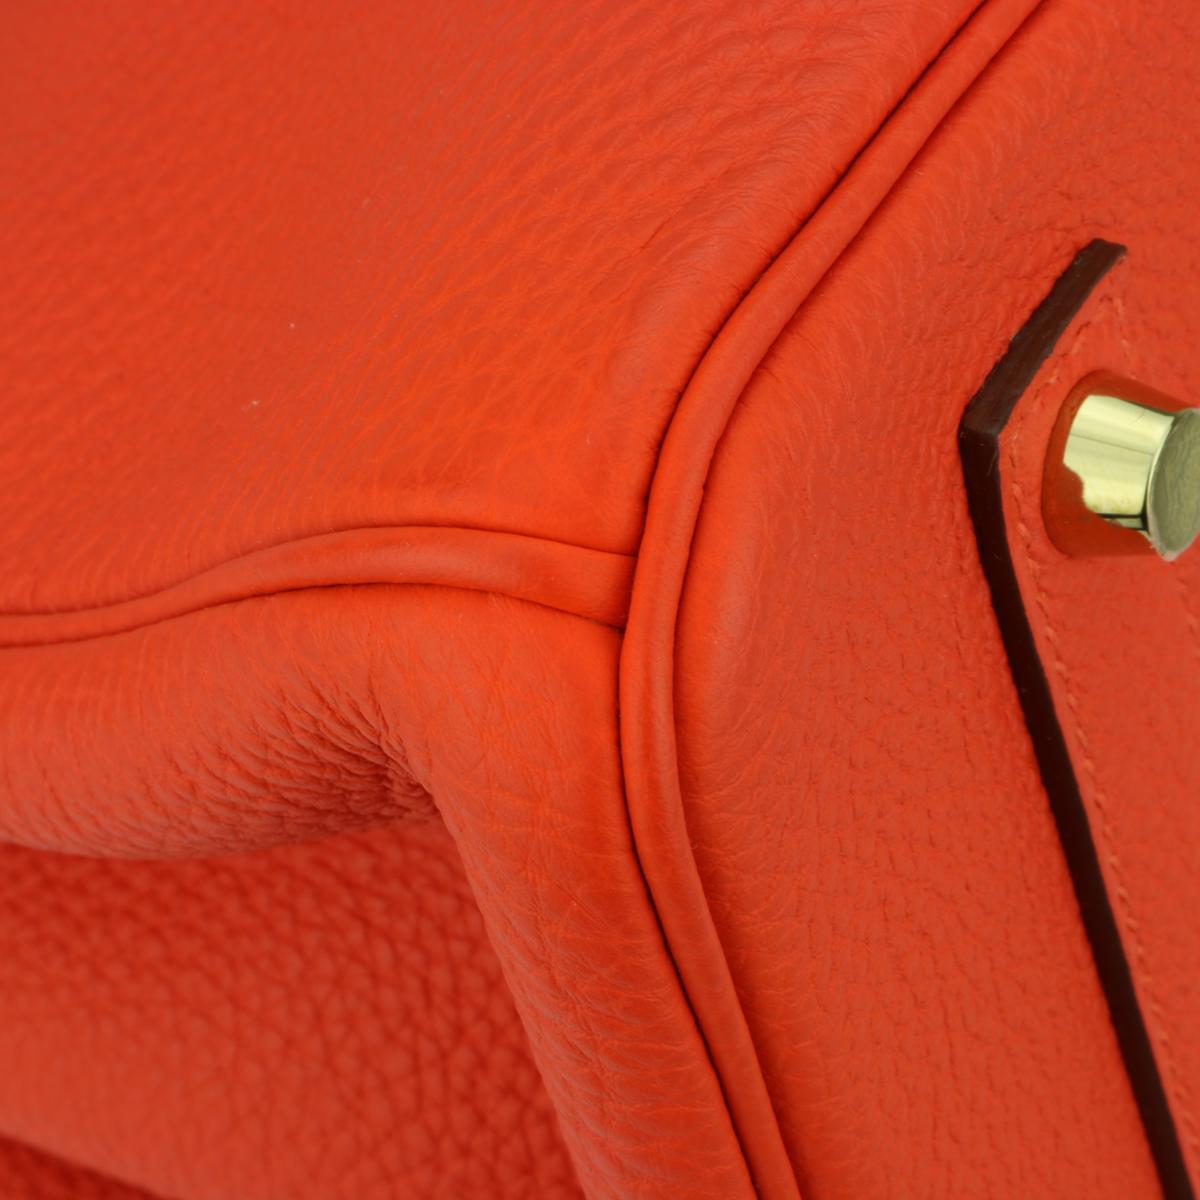 Hermès Birkin Bag 35cm Special Order HSS Bag Capucine Togo Leather w/GHW 2015 3